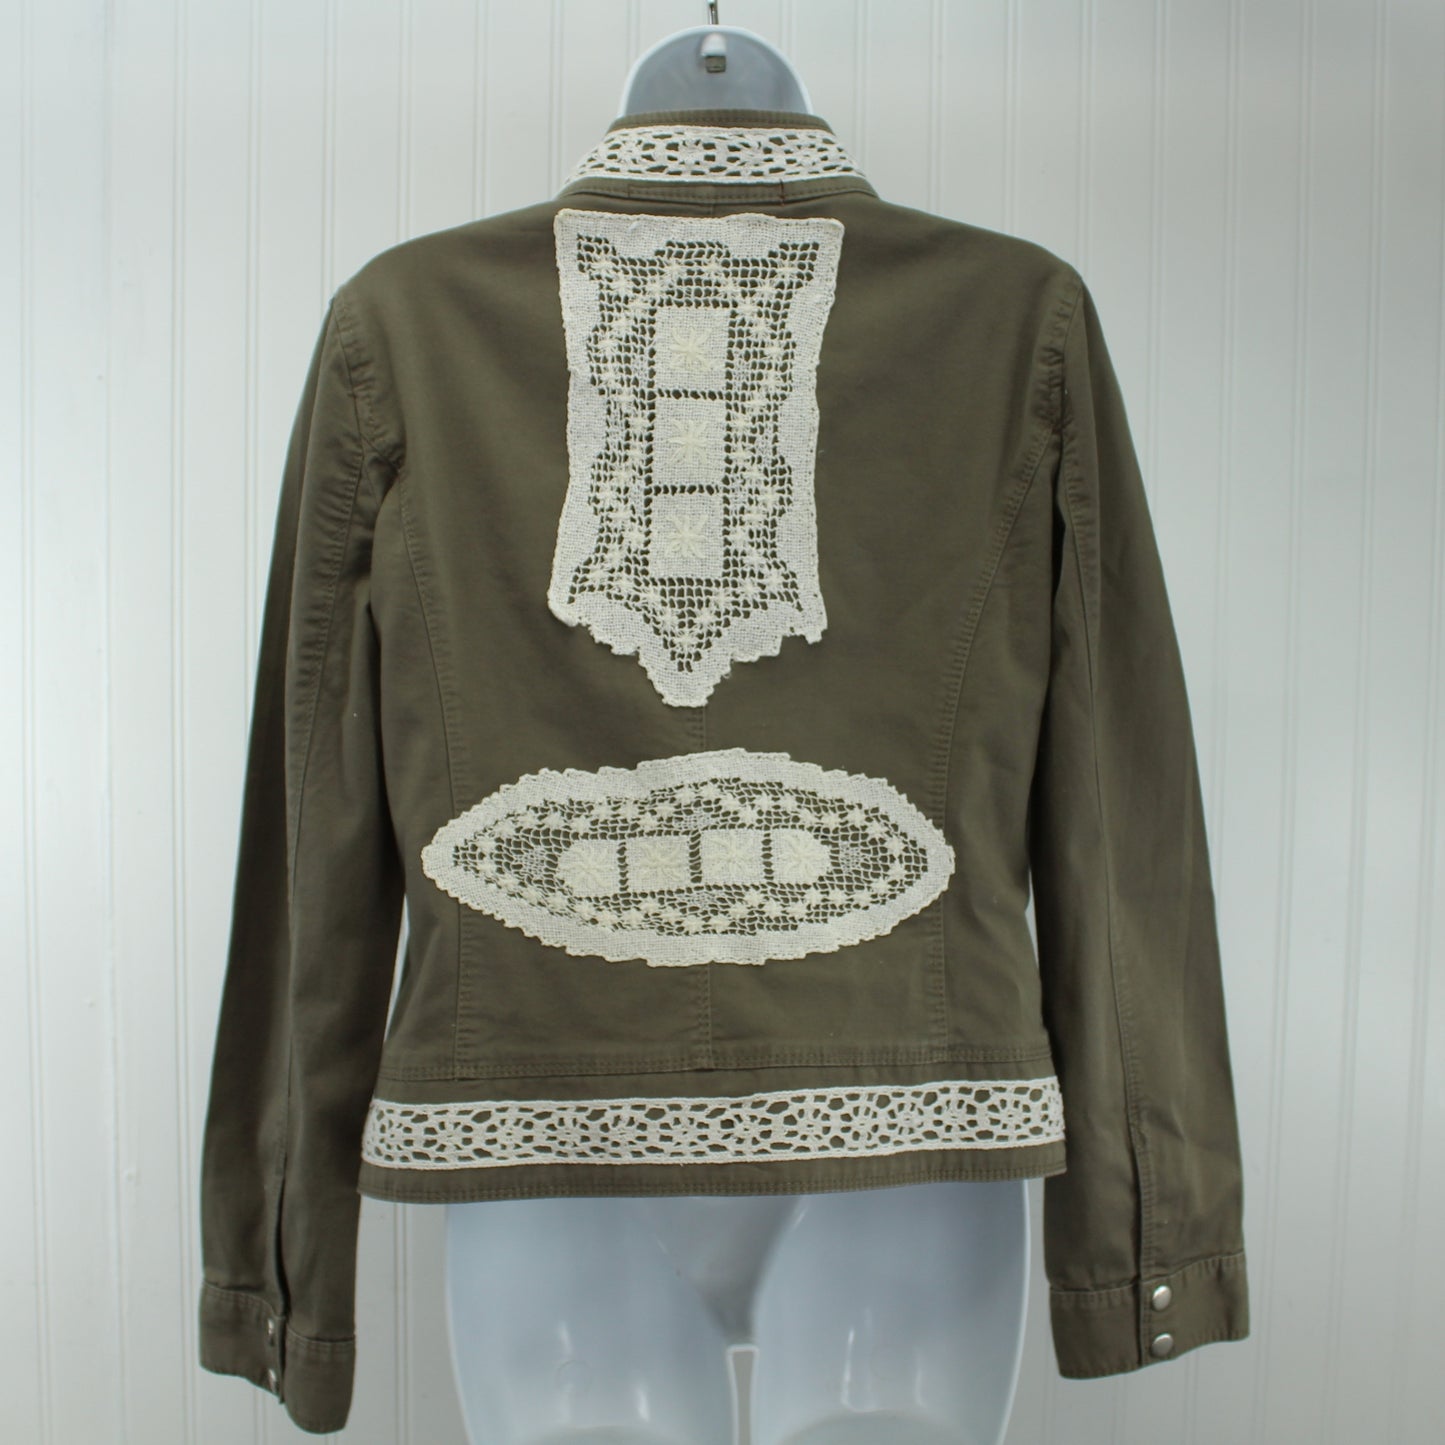 Express Cotton Jacket Mandarin Collar Enhanced Patzi Design Lace Doily Repurposed back view of express jacket